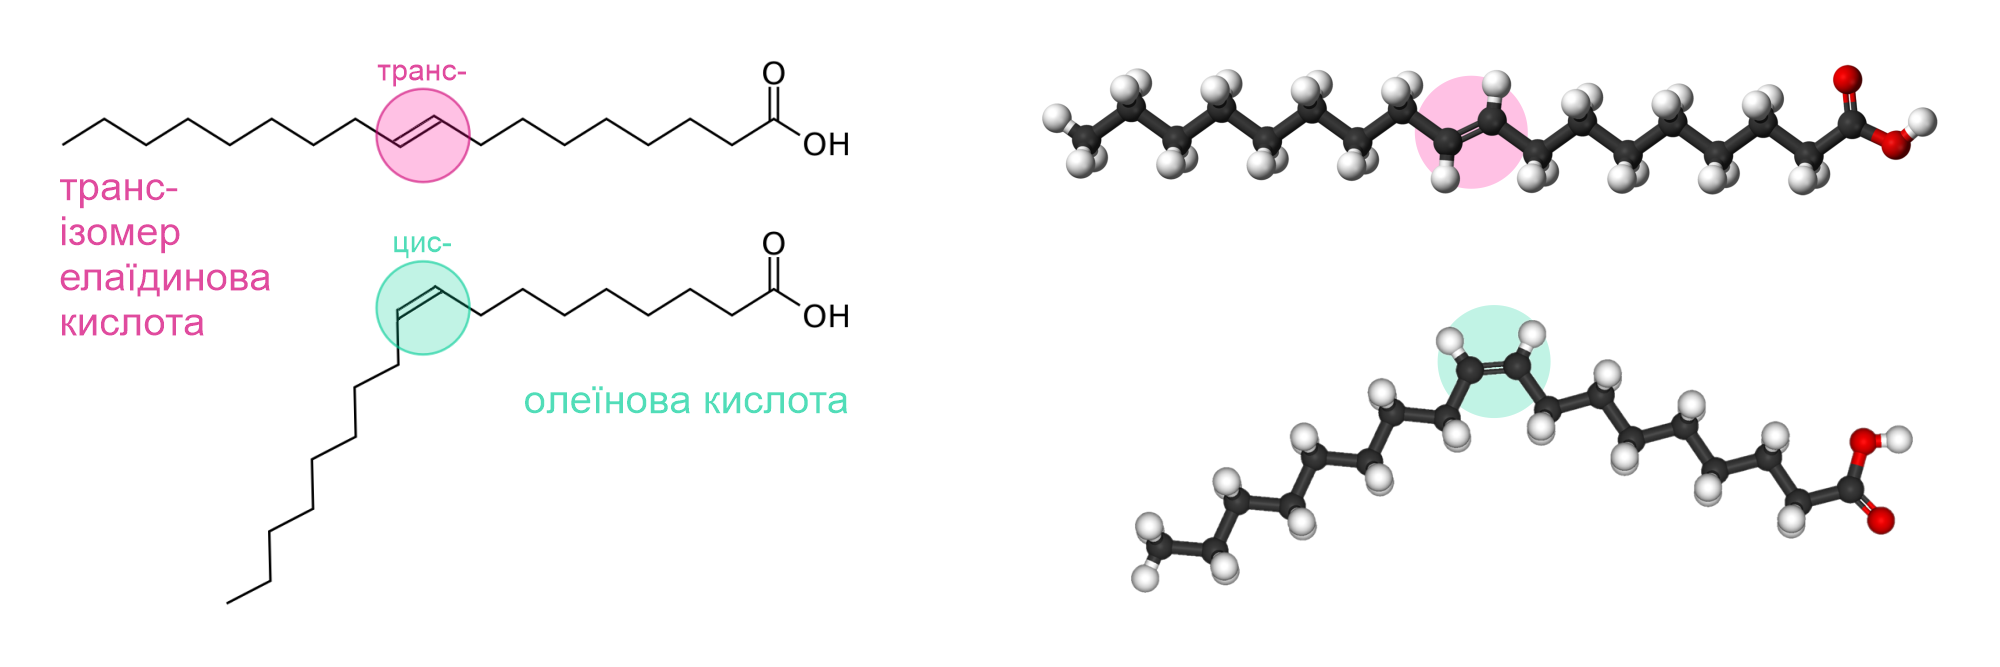 Приклад транс- і цис- ізомерів омега-9 ненасичених жирних кислот: олеїнова кислота та її транс-ізомер елаїдинова кислота.